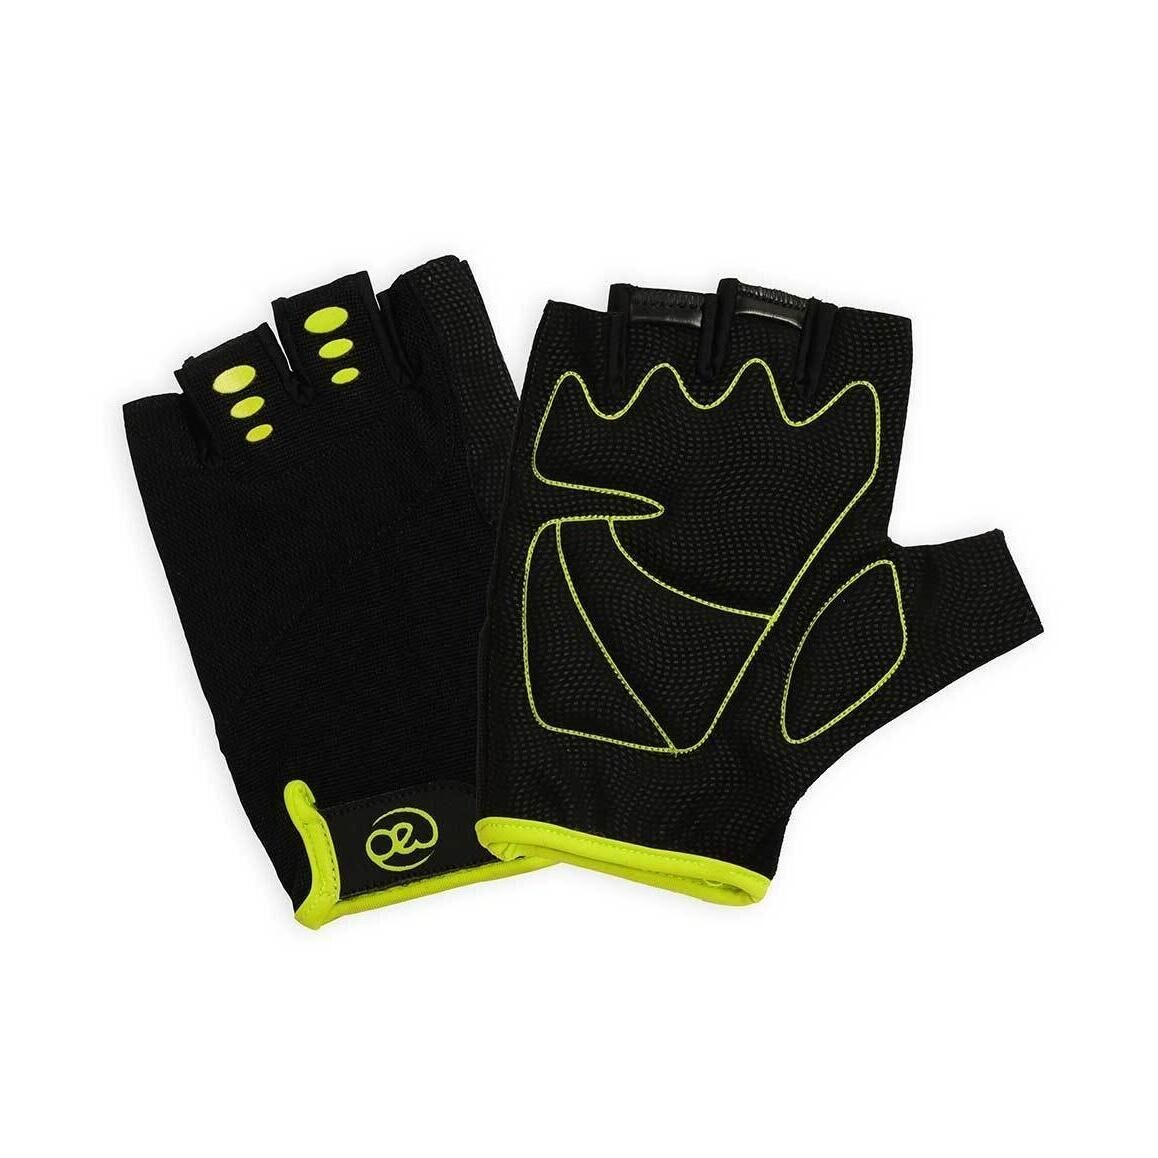 FITNESS-MAD Mens Training Gloves (Black/Green)